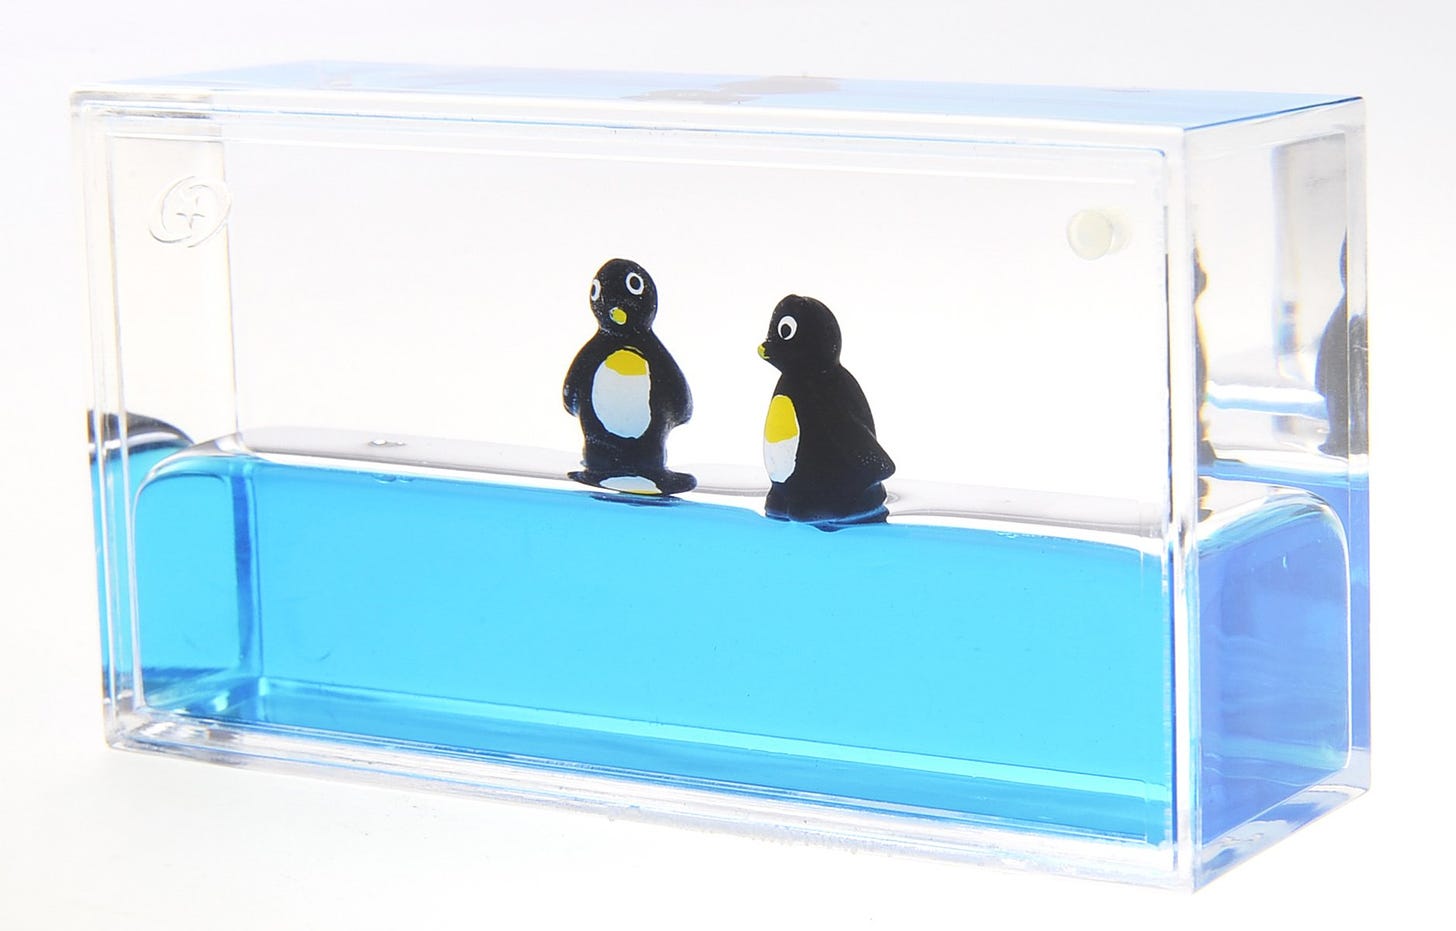 Penguin desk toy